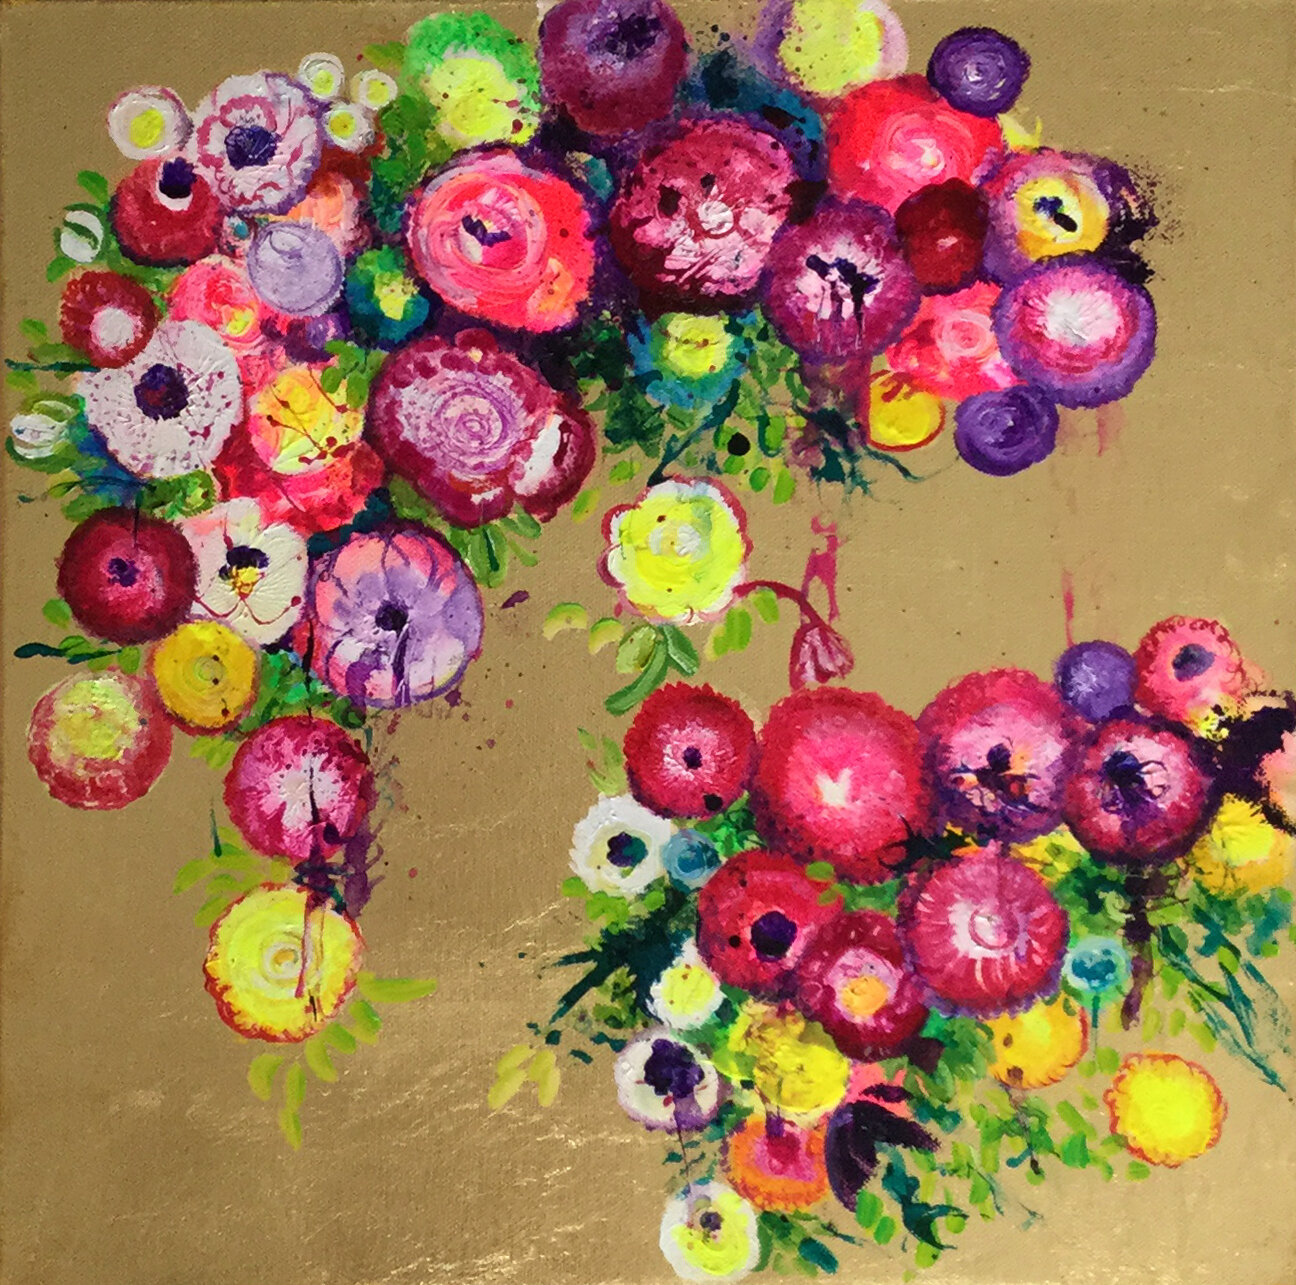  Anastasia Gklava - Jolly - Oil and gold leaf on canvas - Dim: 16 x 16 in / 40 x 40 cm 